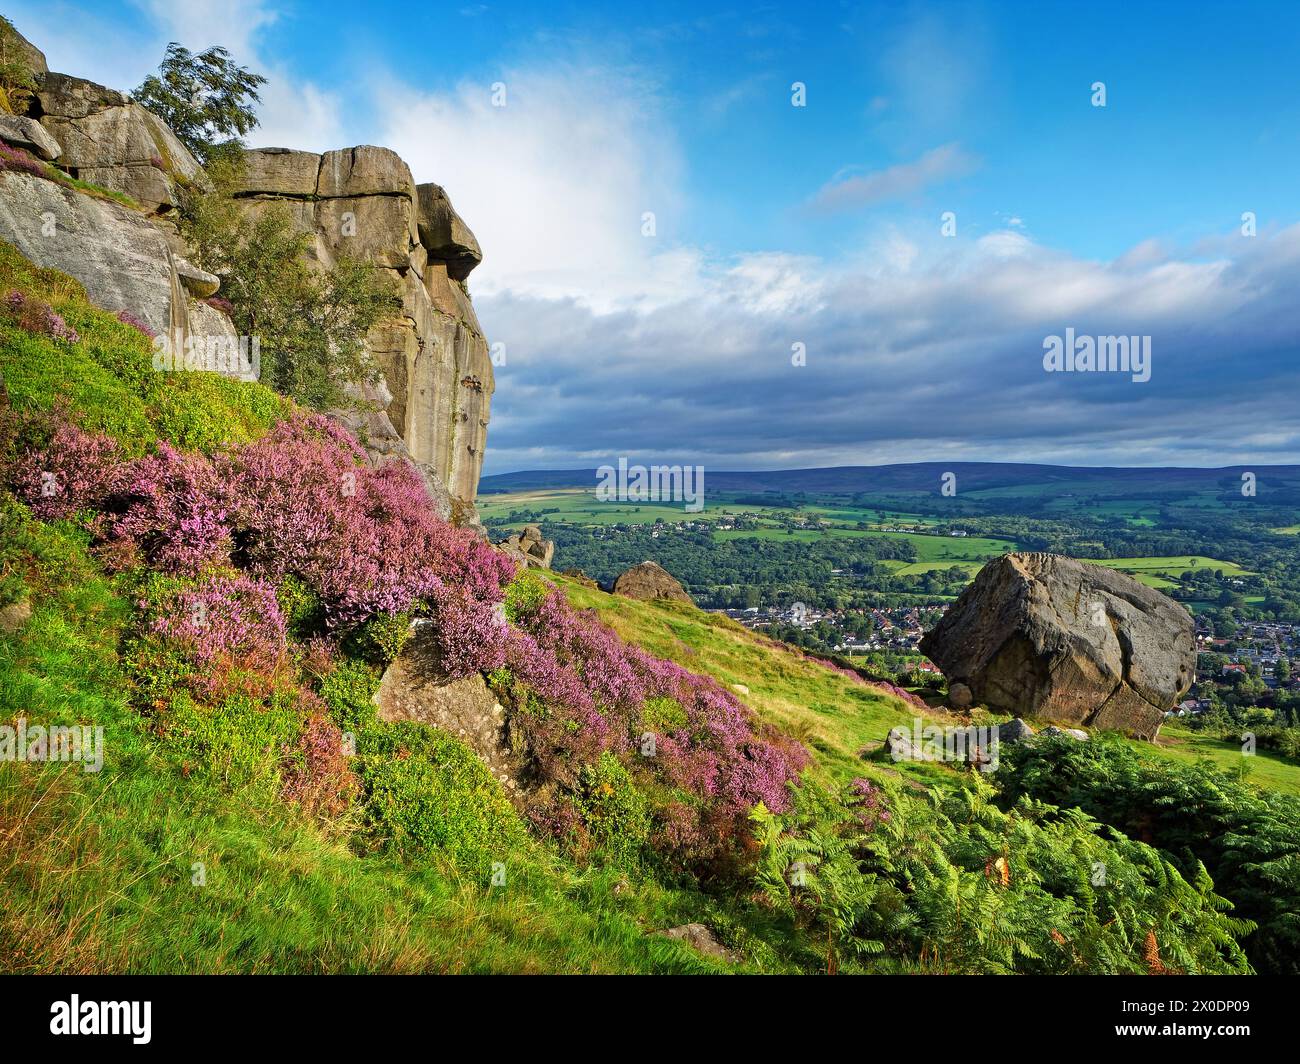 UK, West Yorkshire, Ilkley, Ilkley Moor Cow and Calf Rocks. Stock Photo